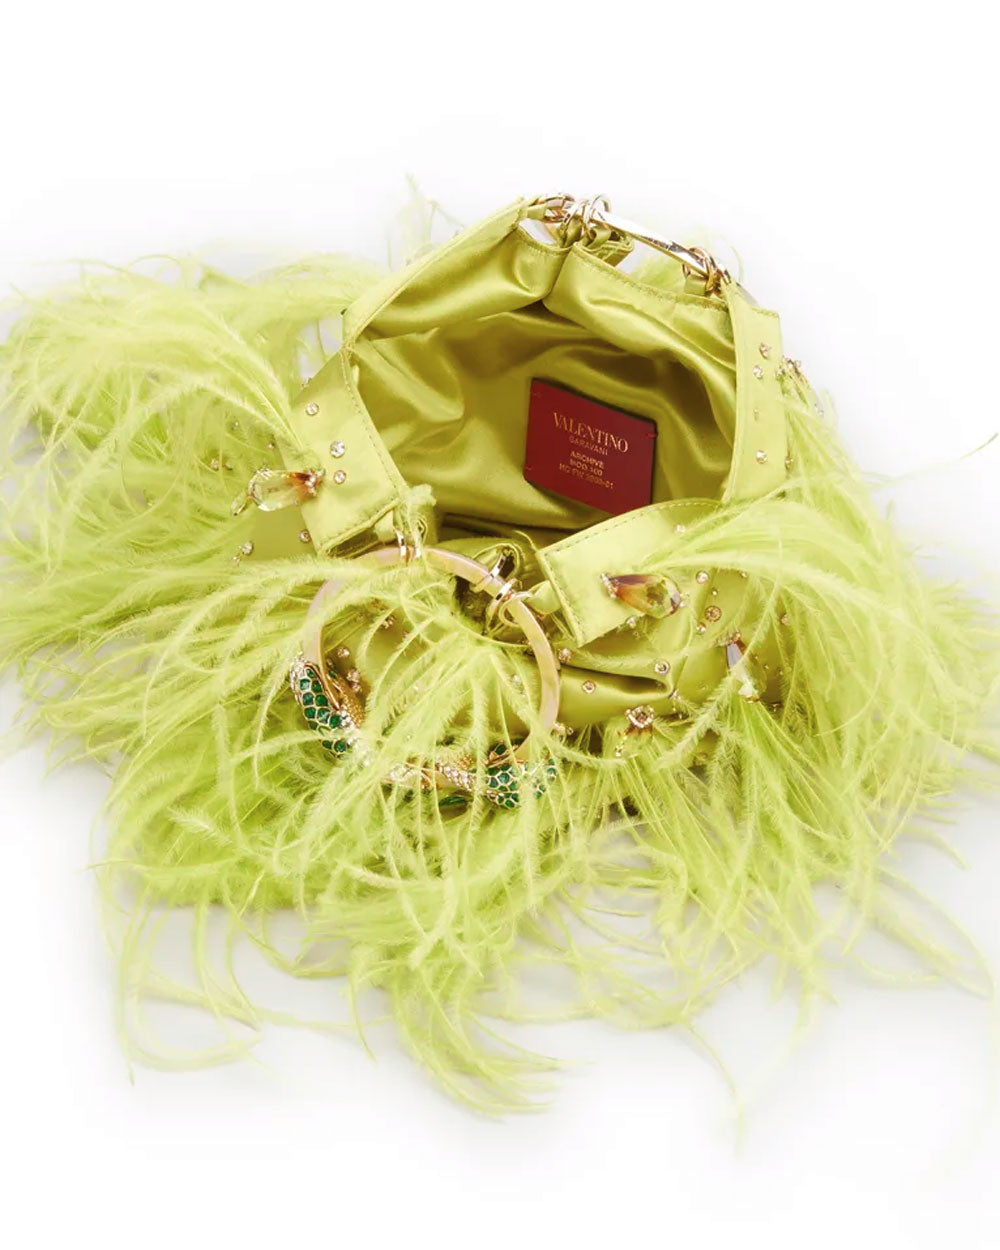 Feather Embellished Clutch Bag in Verde Lime